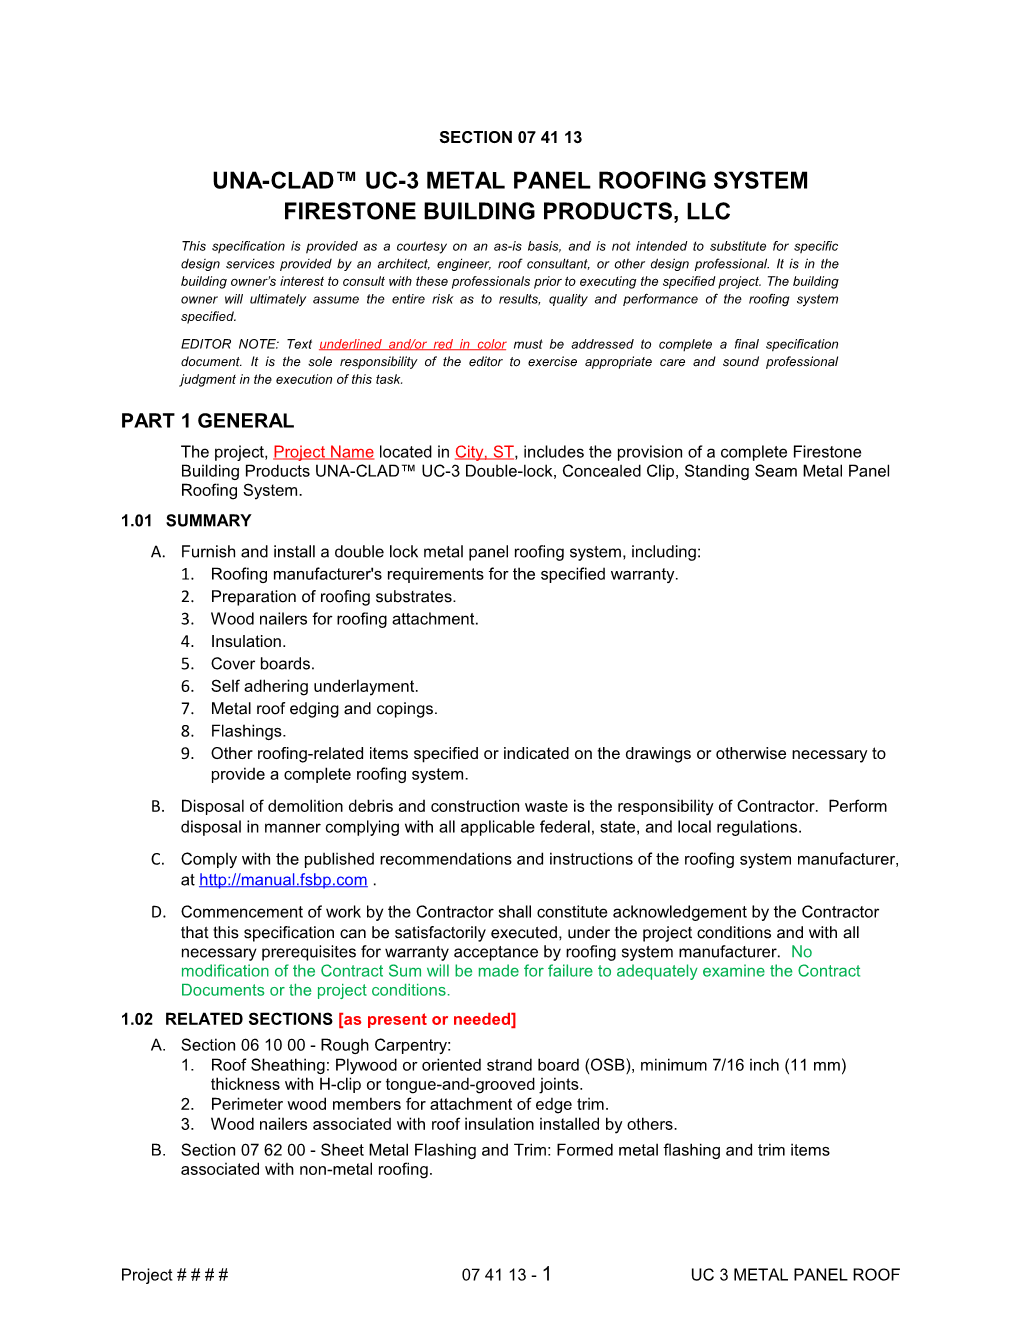 Una-Clad Uc-3 Metal Panelroofing System